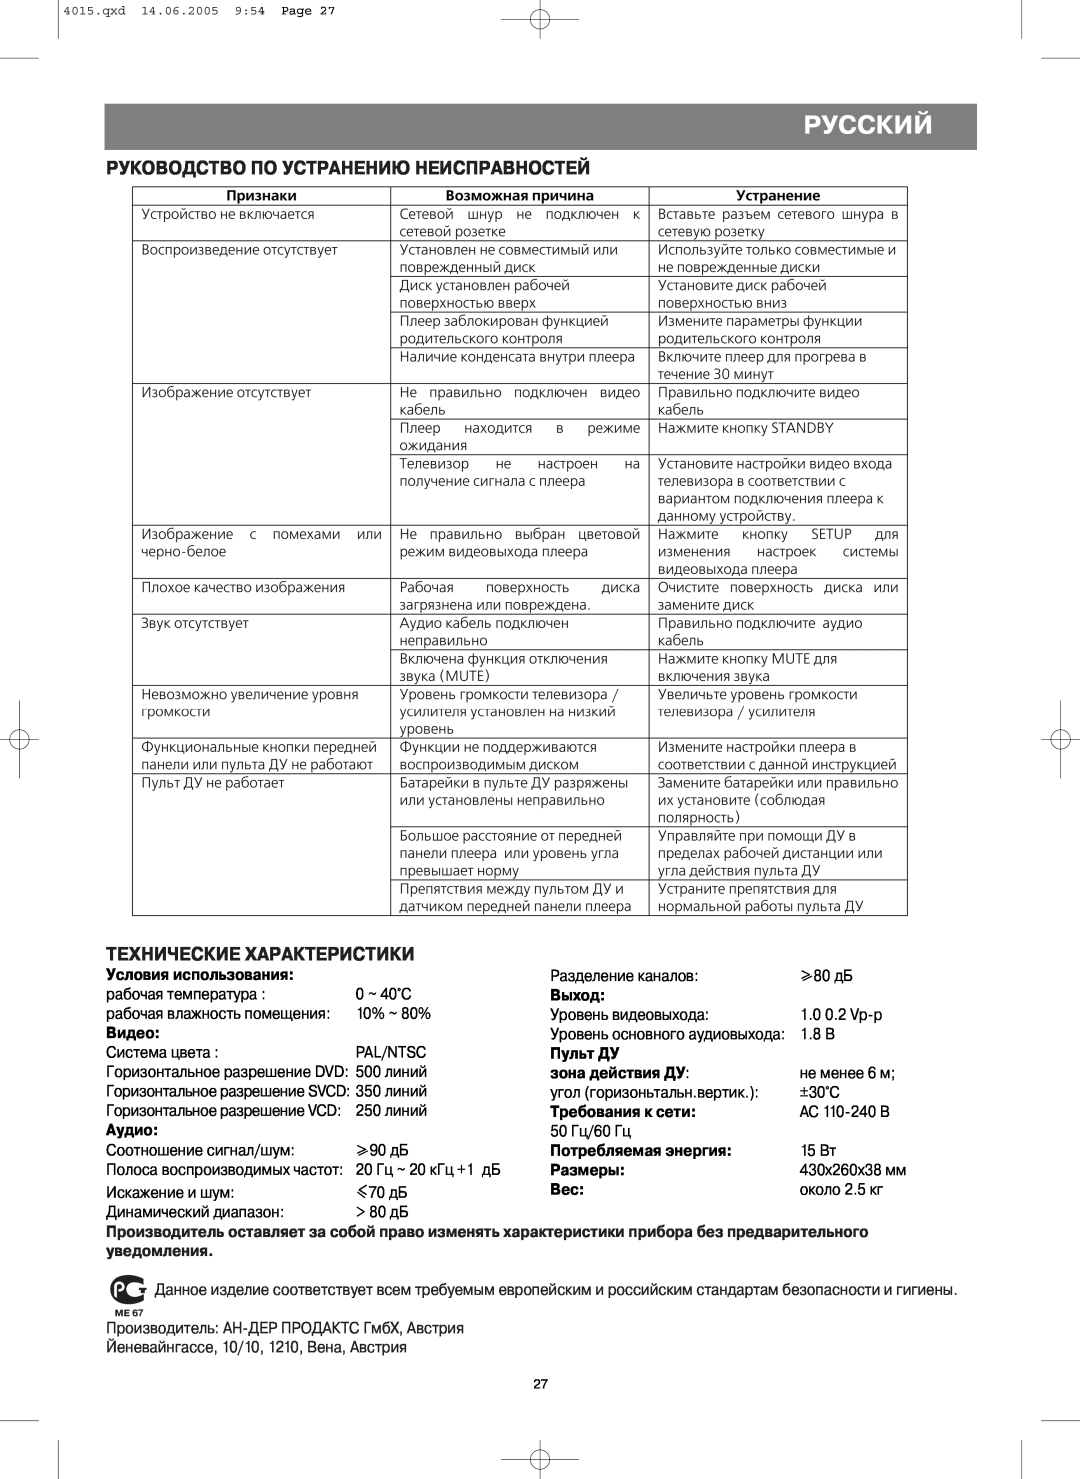 LG Electronics VT 4015 instruction manual Руководство По Устранению Неисправностей Технические Характеристики, Русский 